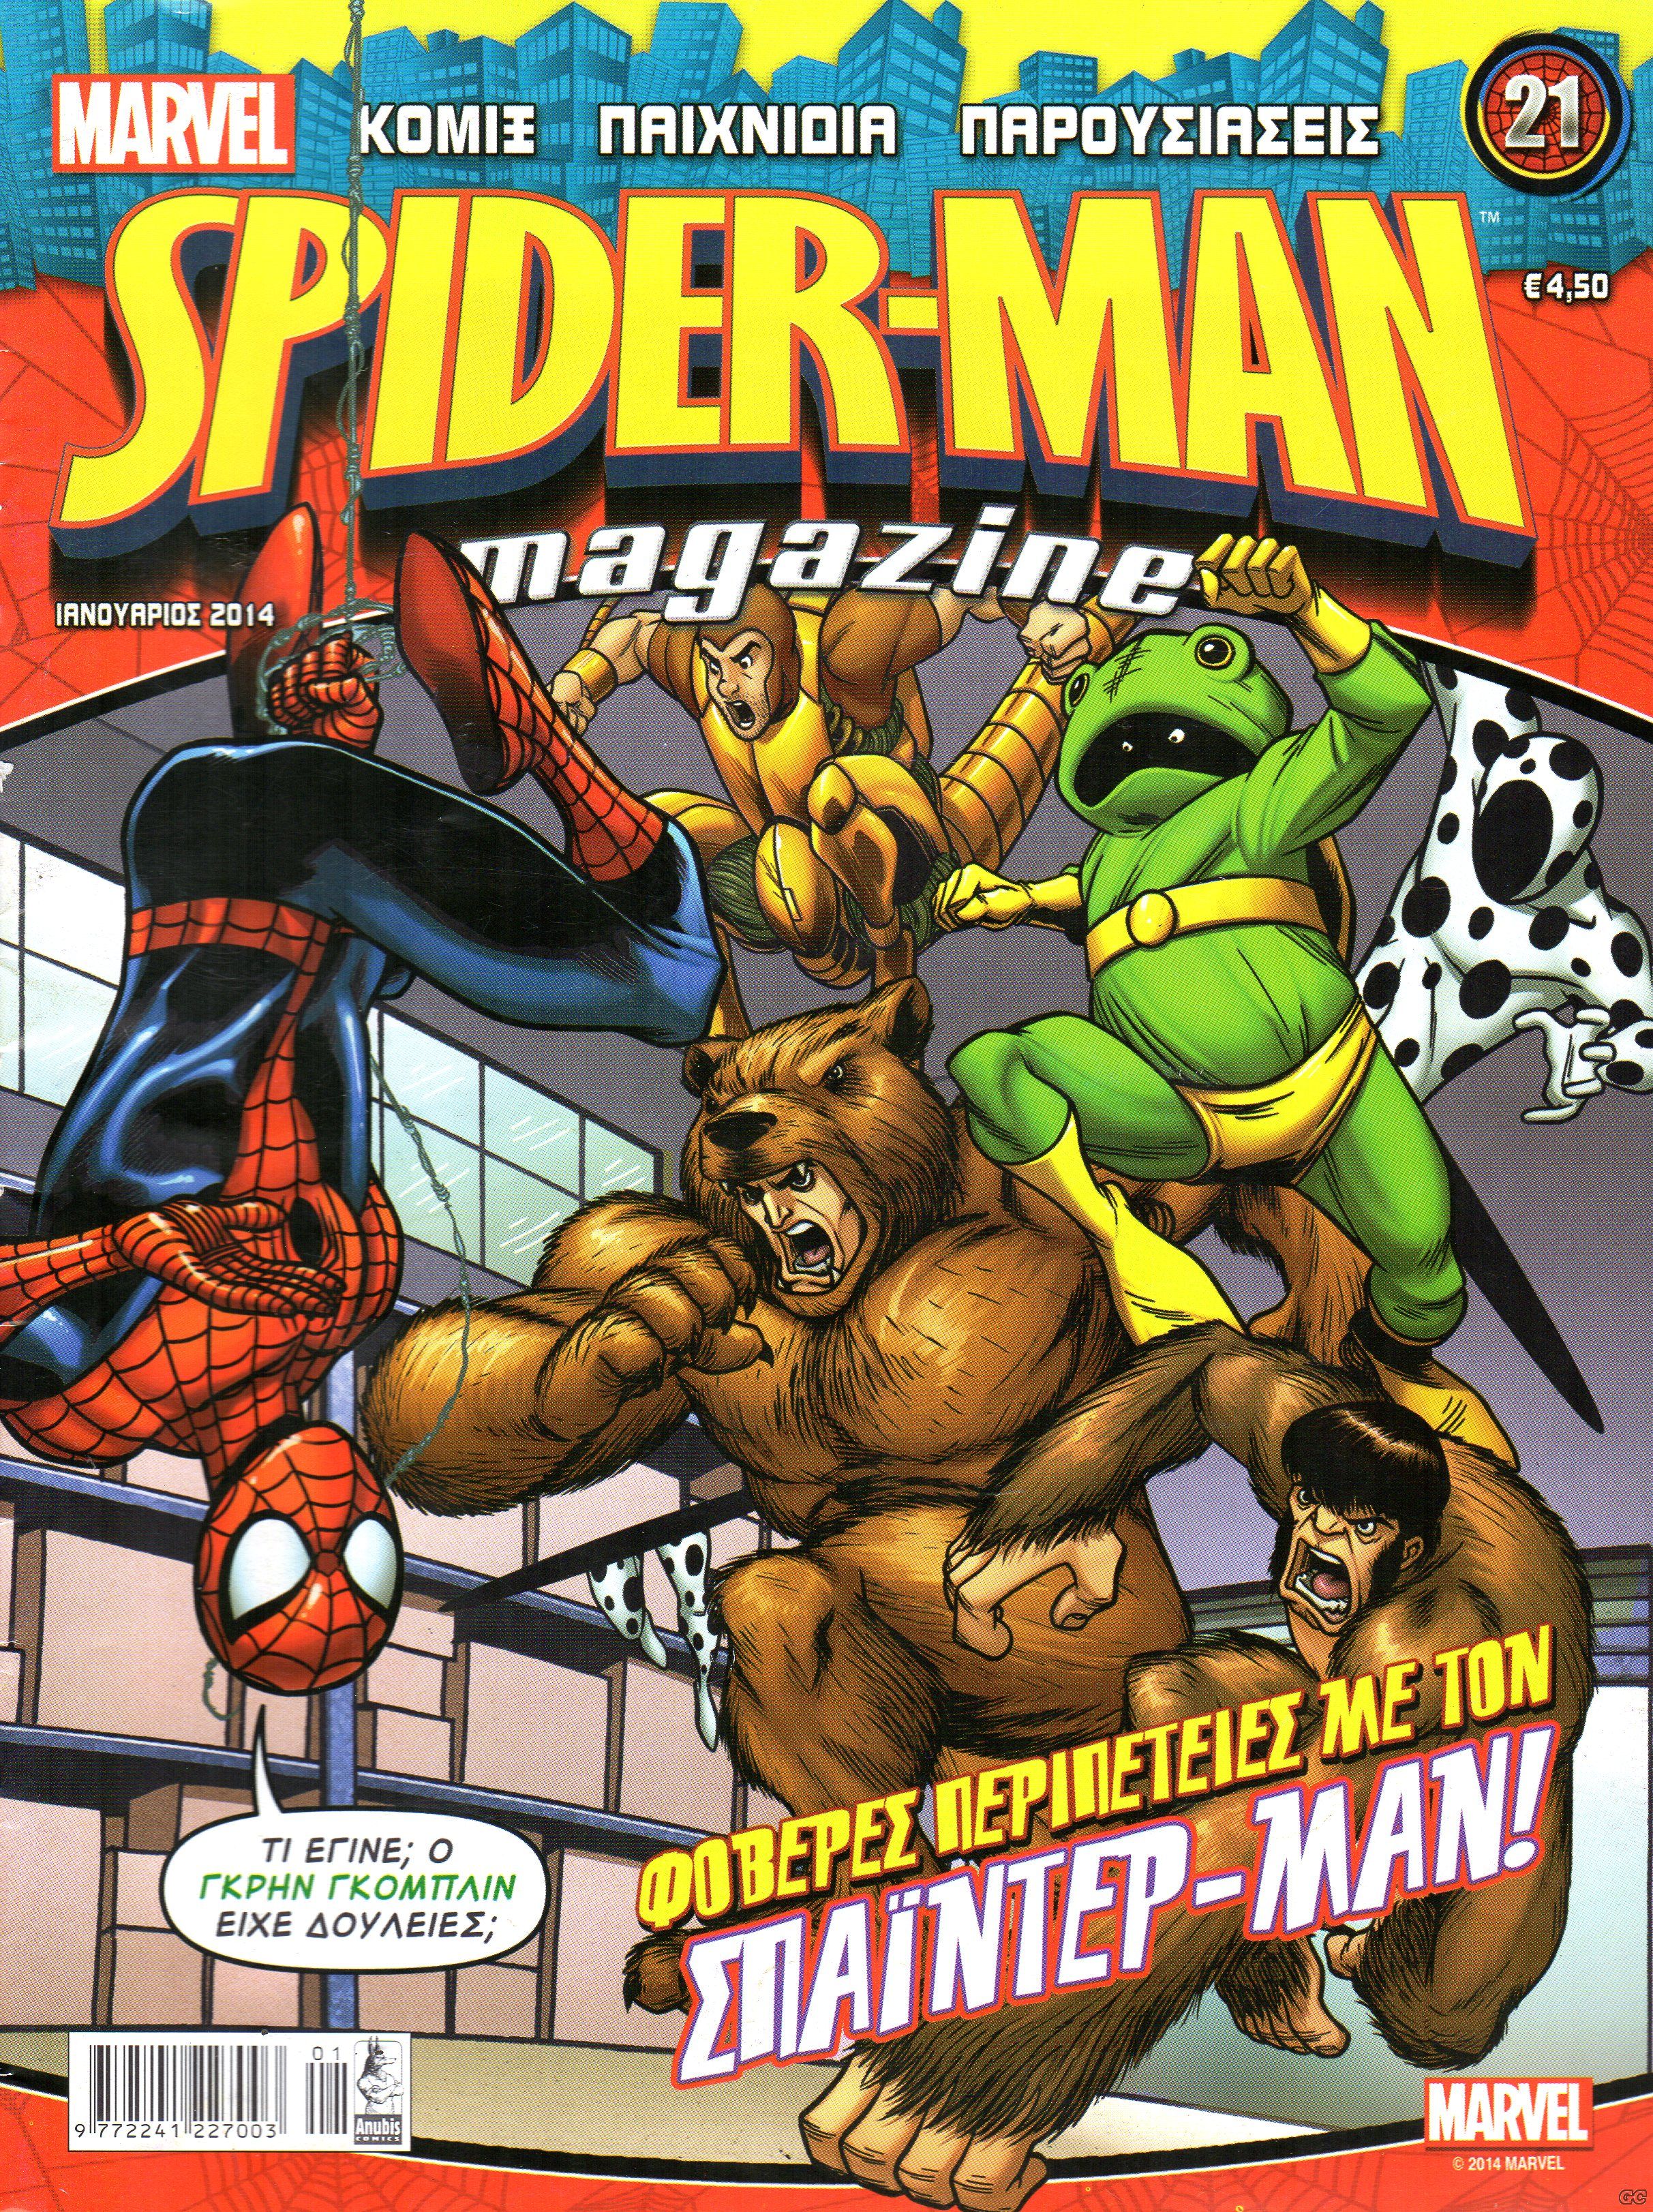 SpidermanMagazine_0021.jpg